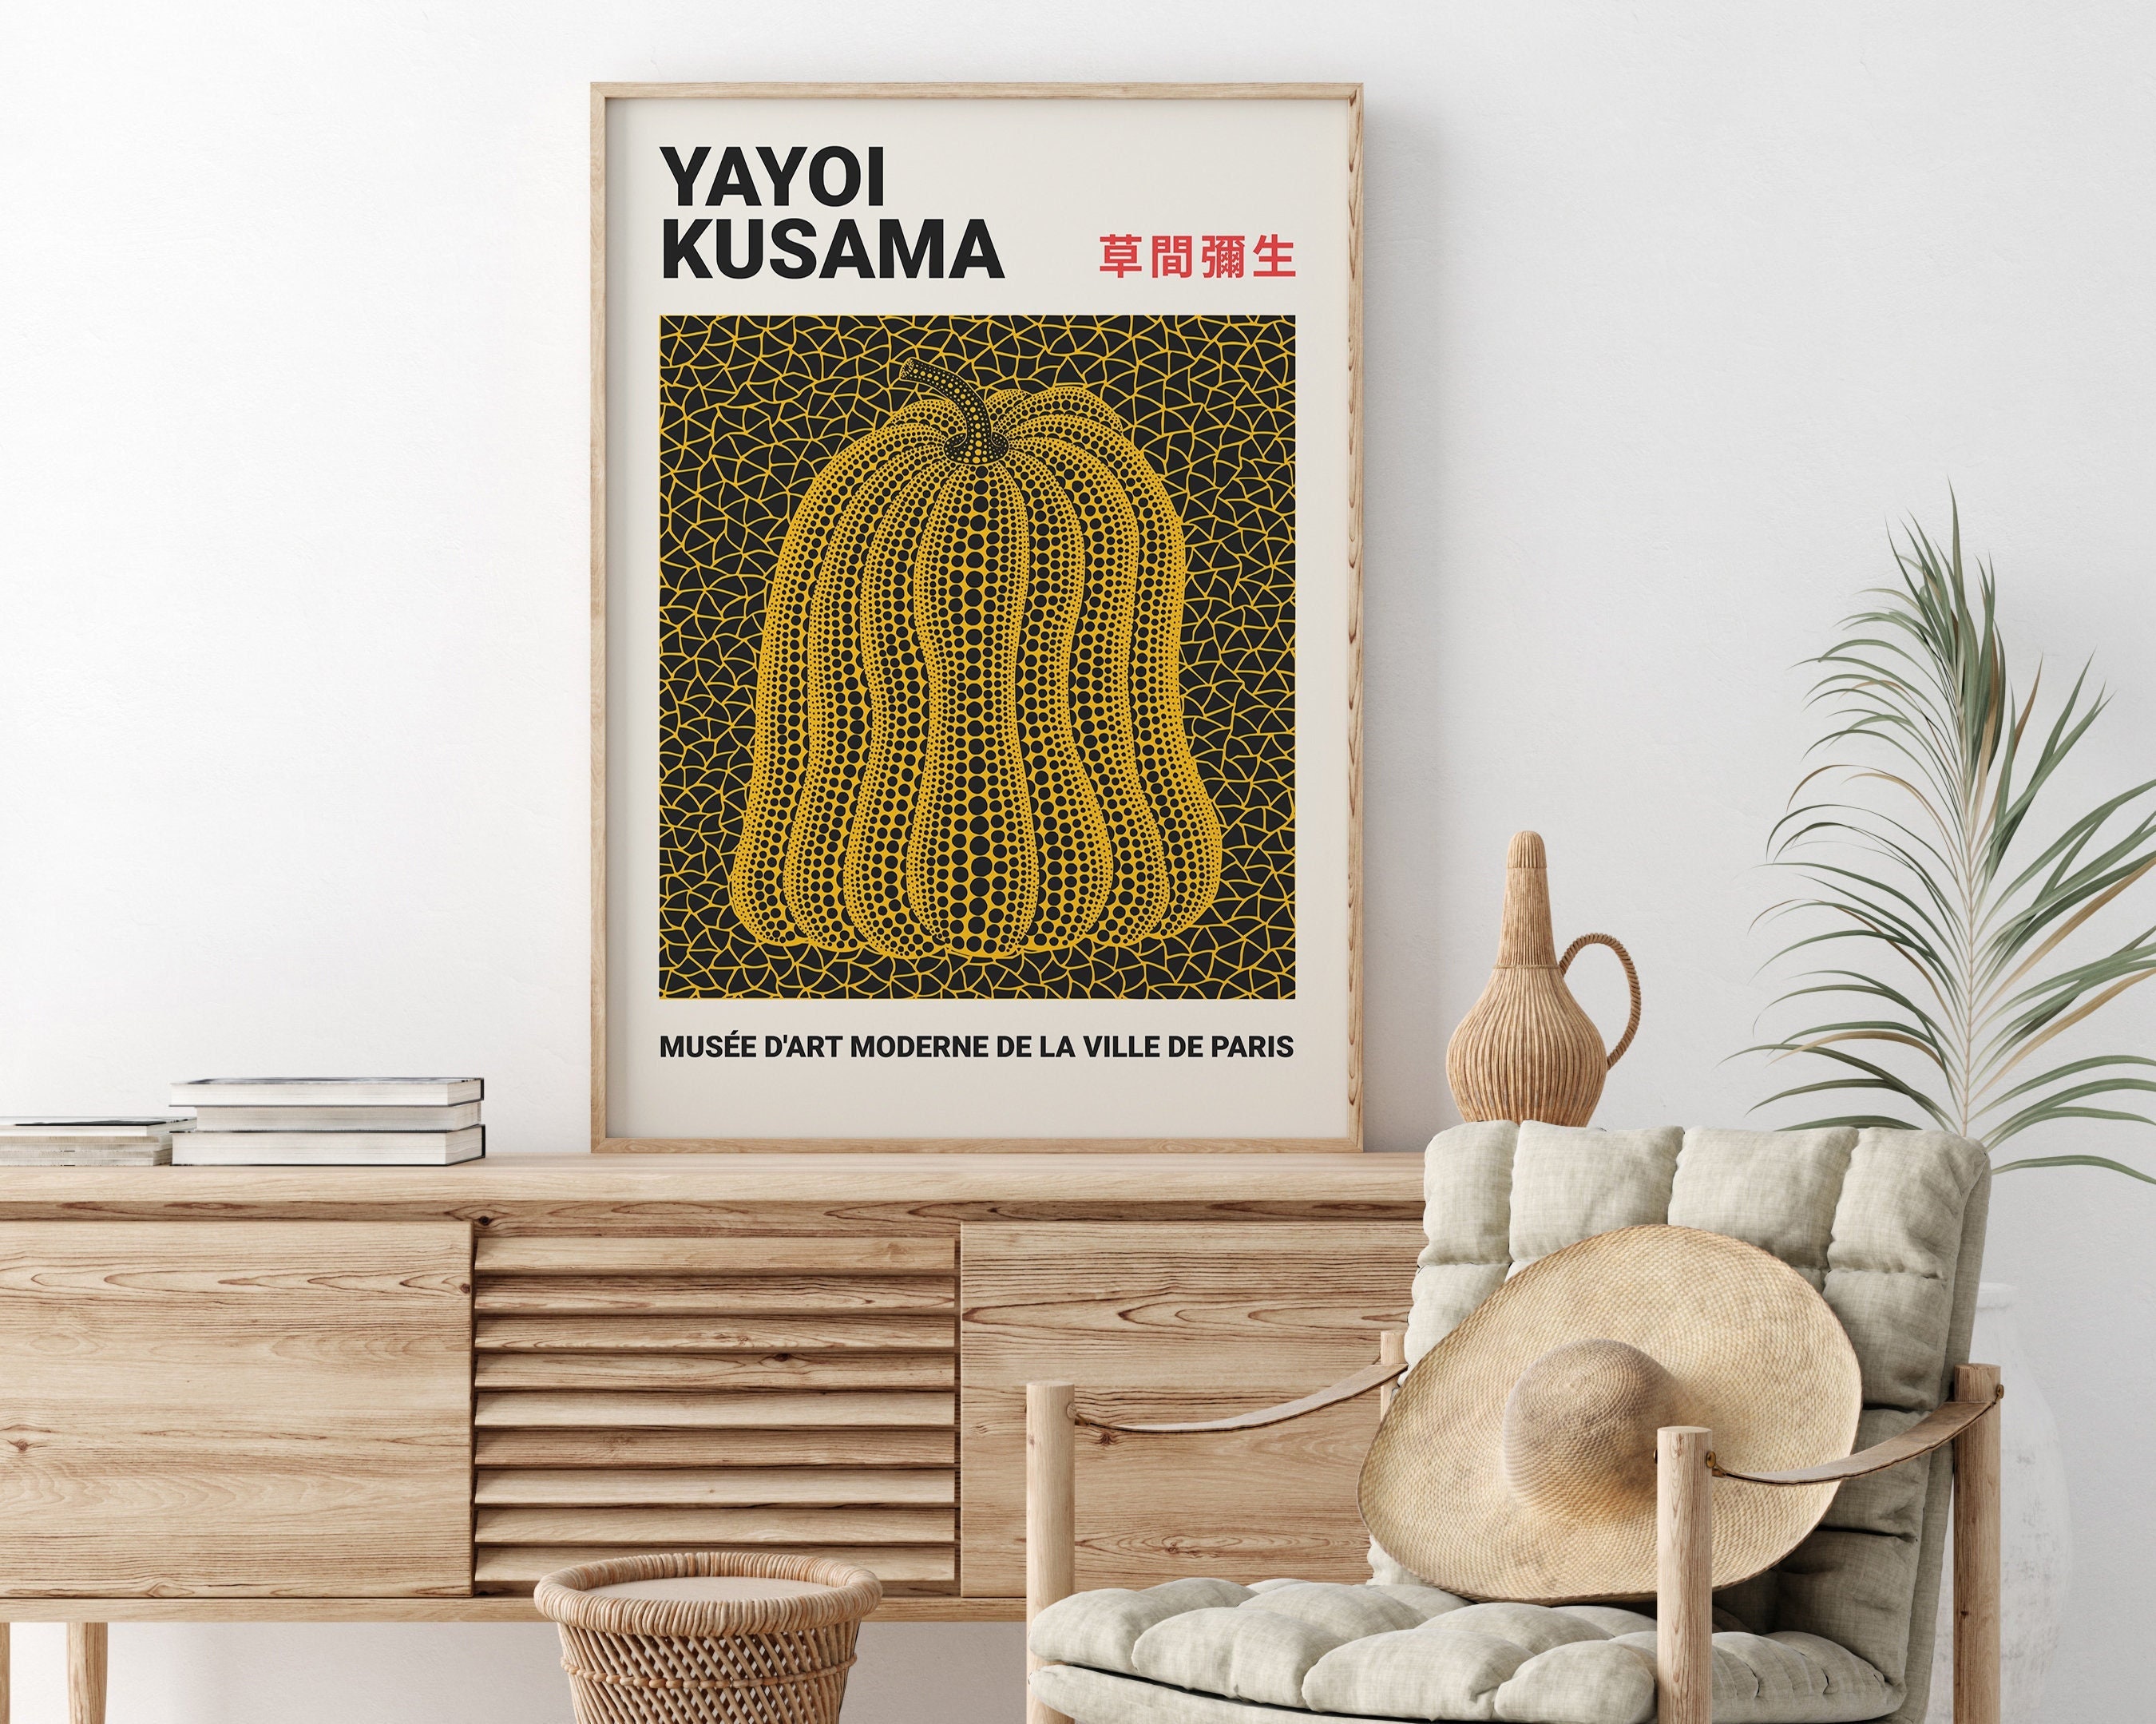 Yayoi Kusama - Pumpkin Colorfull Photographic Print for Sale by  penrosej121